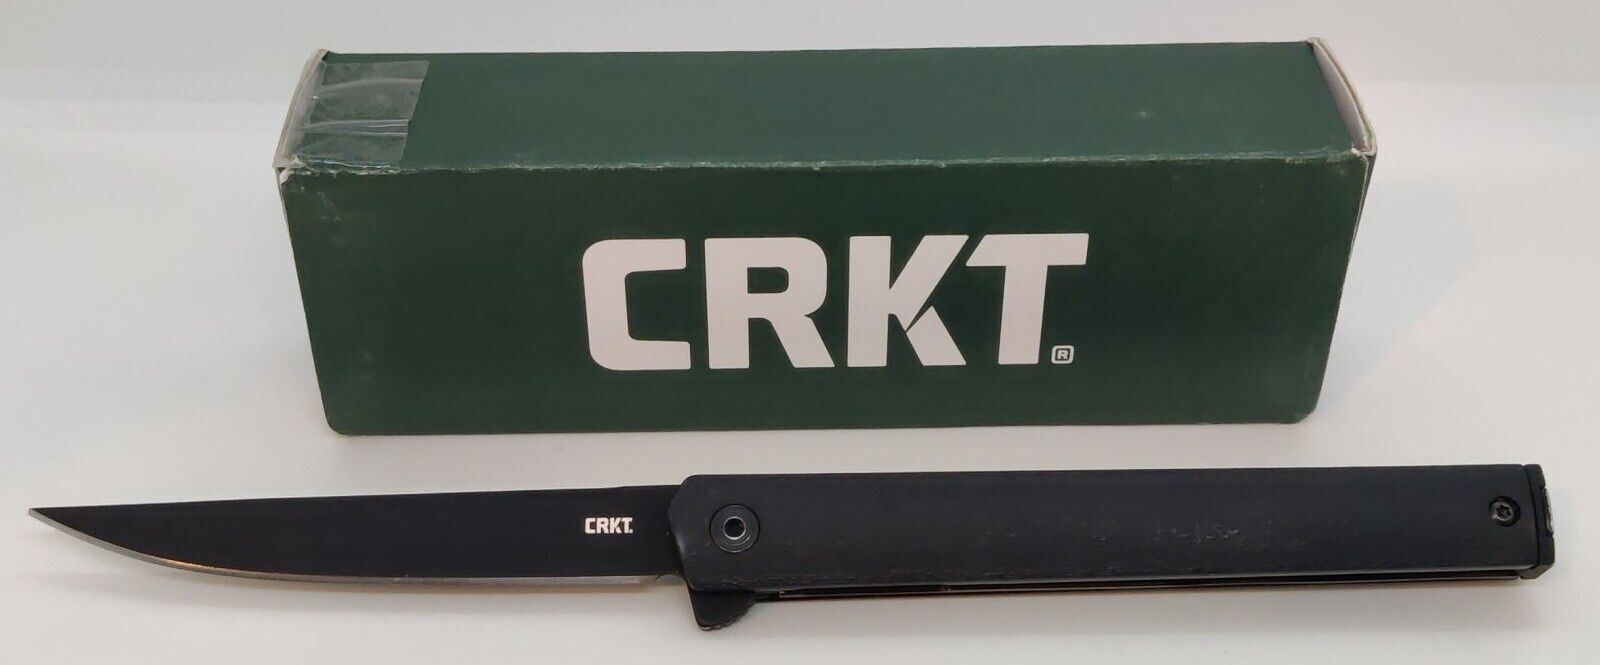 CRKT 7097K CEO FLIPPER KNIFE IKBS PIVOT BLACK GRN HANDLE 3.35